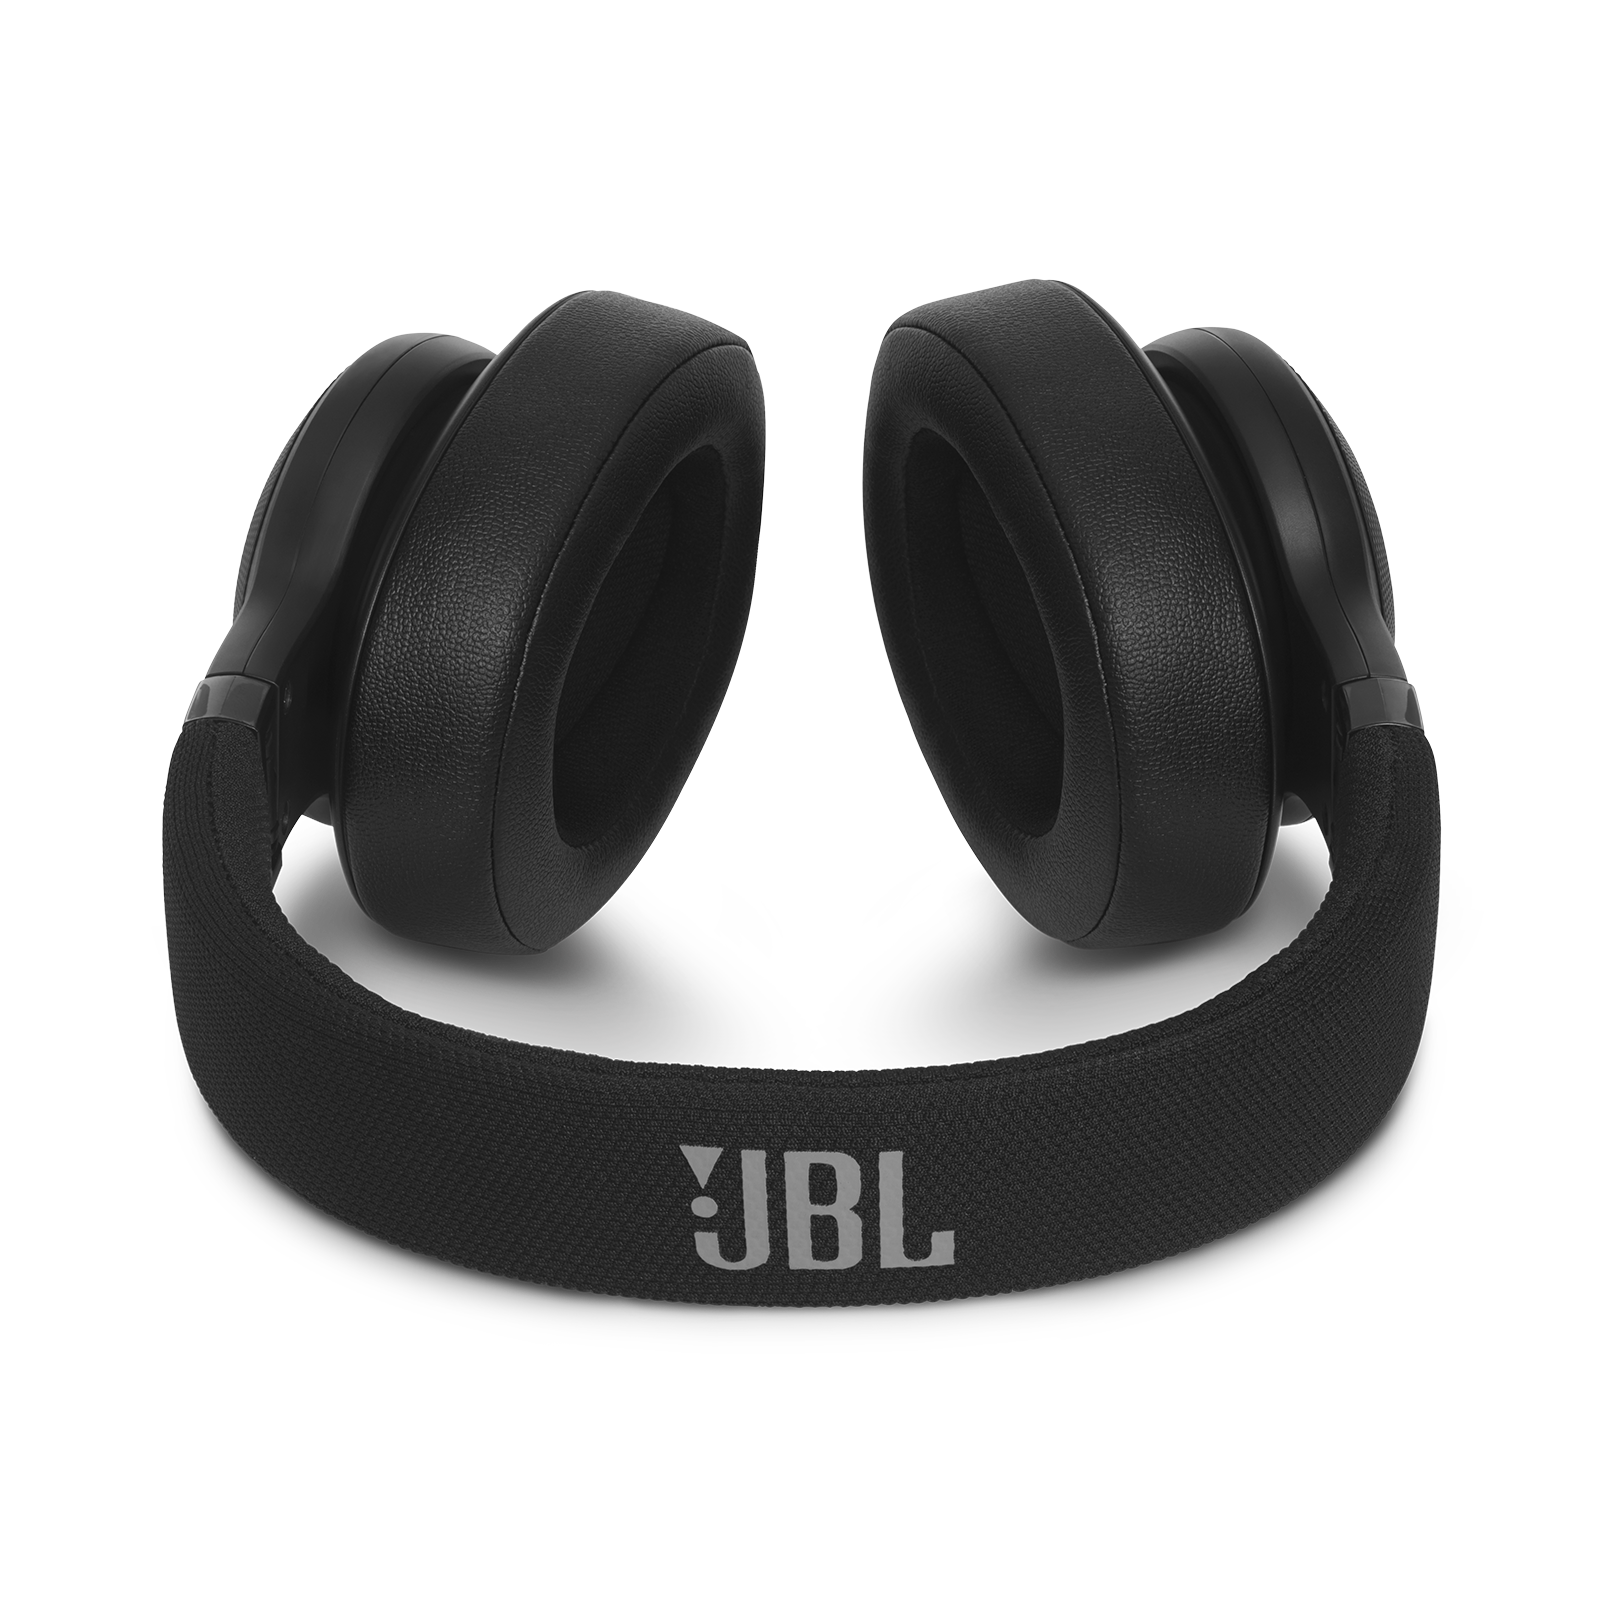 2m USB schwarz Ladegerät Kabel für JBL e55 BT jble 55 BTBLK Wireless Kopfhörer 